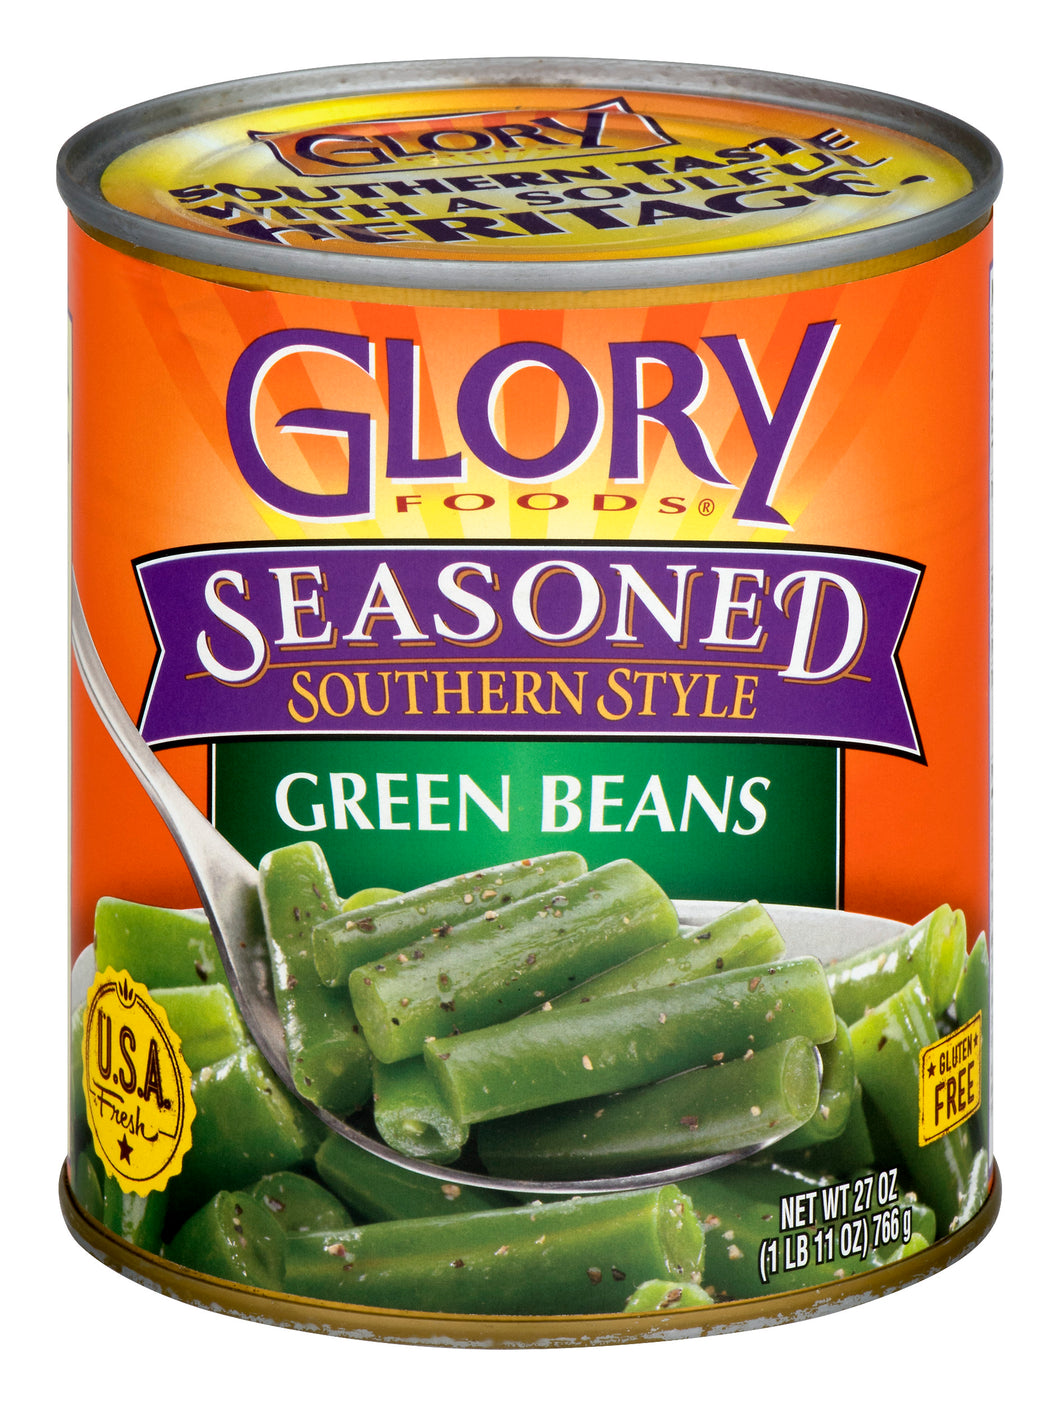 Glory Seasoned Southern Style Green Beans 27oz